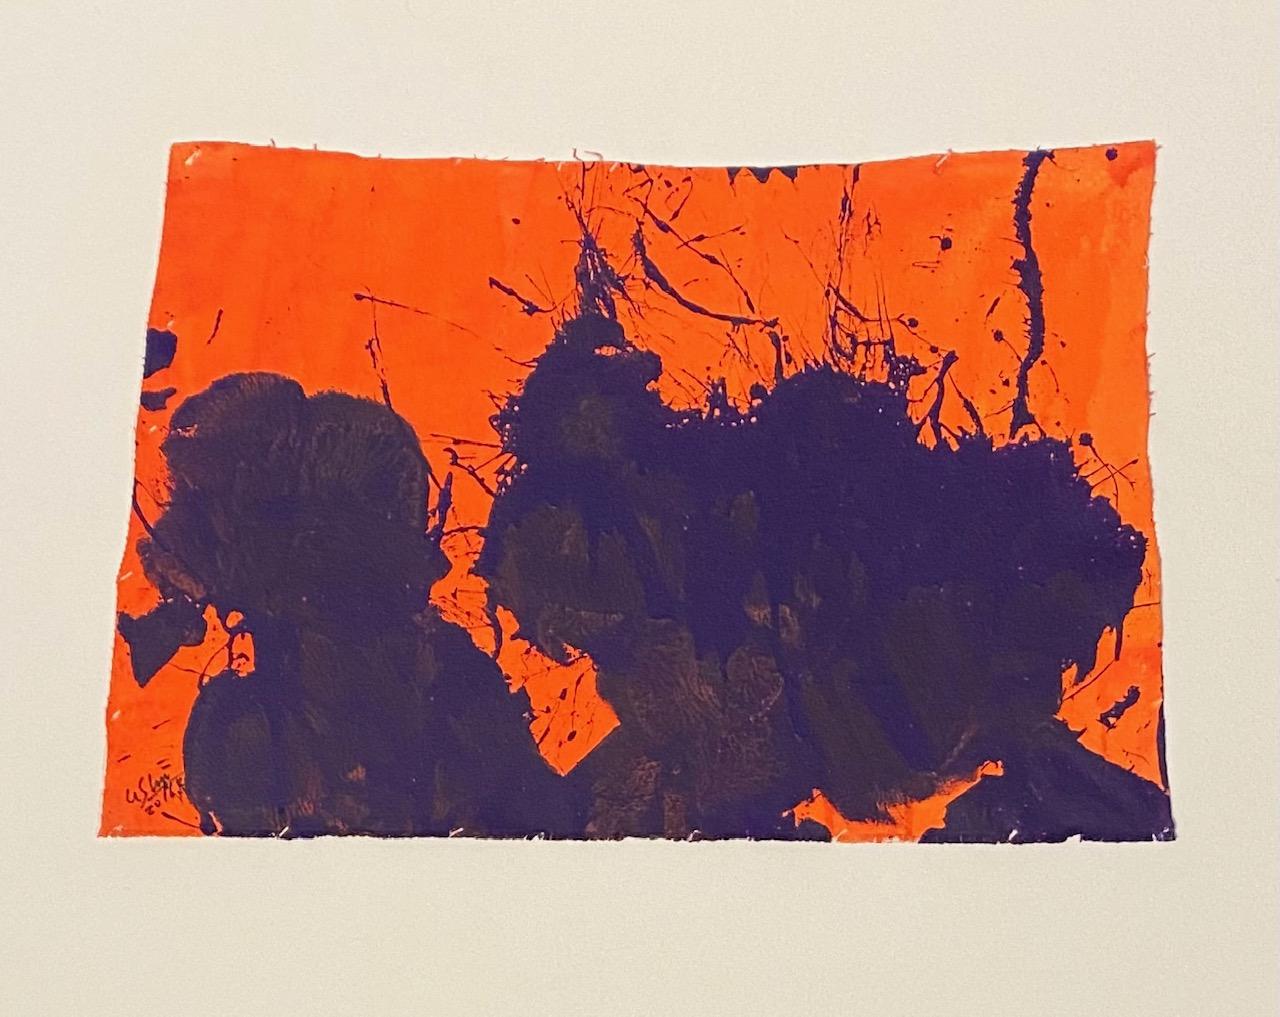 Abstract Painting Ushio Shinohara - « Bleu sur orange », peinture acrylique sur toile - peinture abstraite de boxe